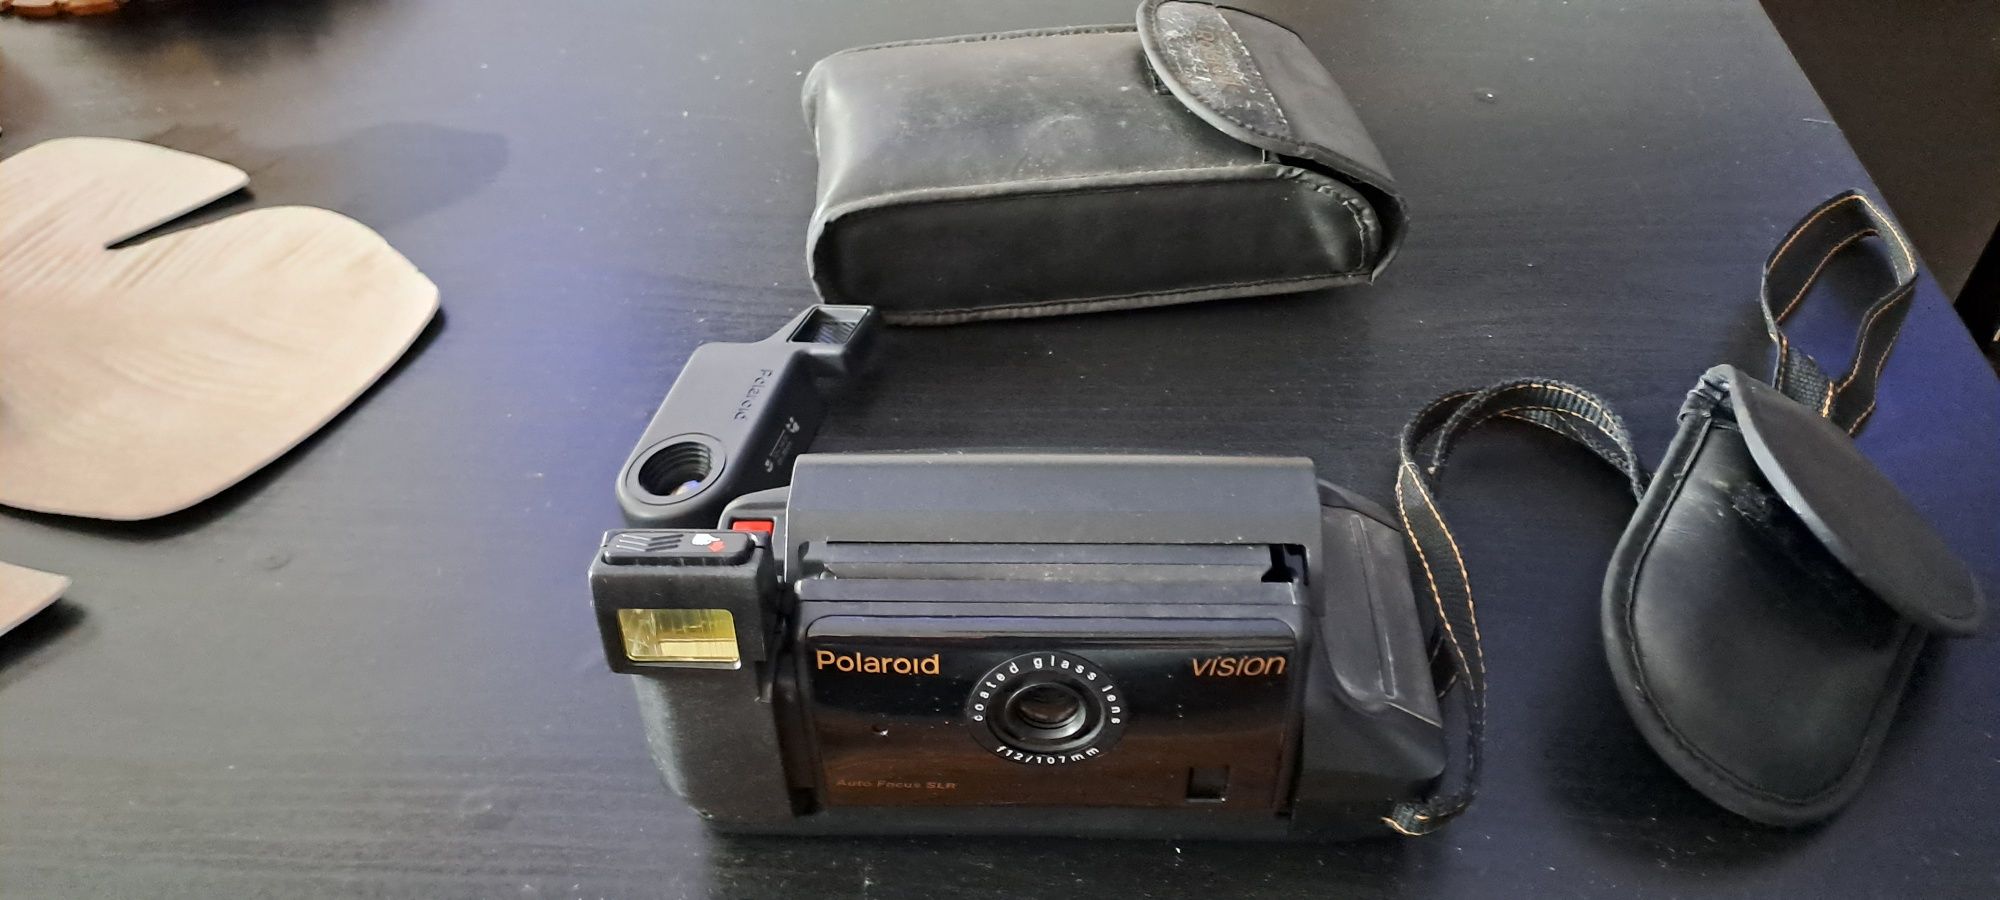 Polaroid Auto Focus SLR